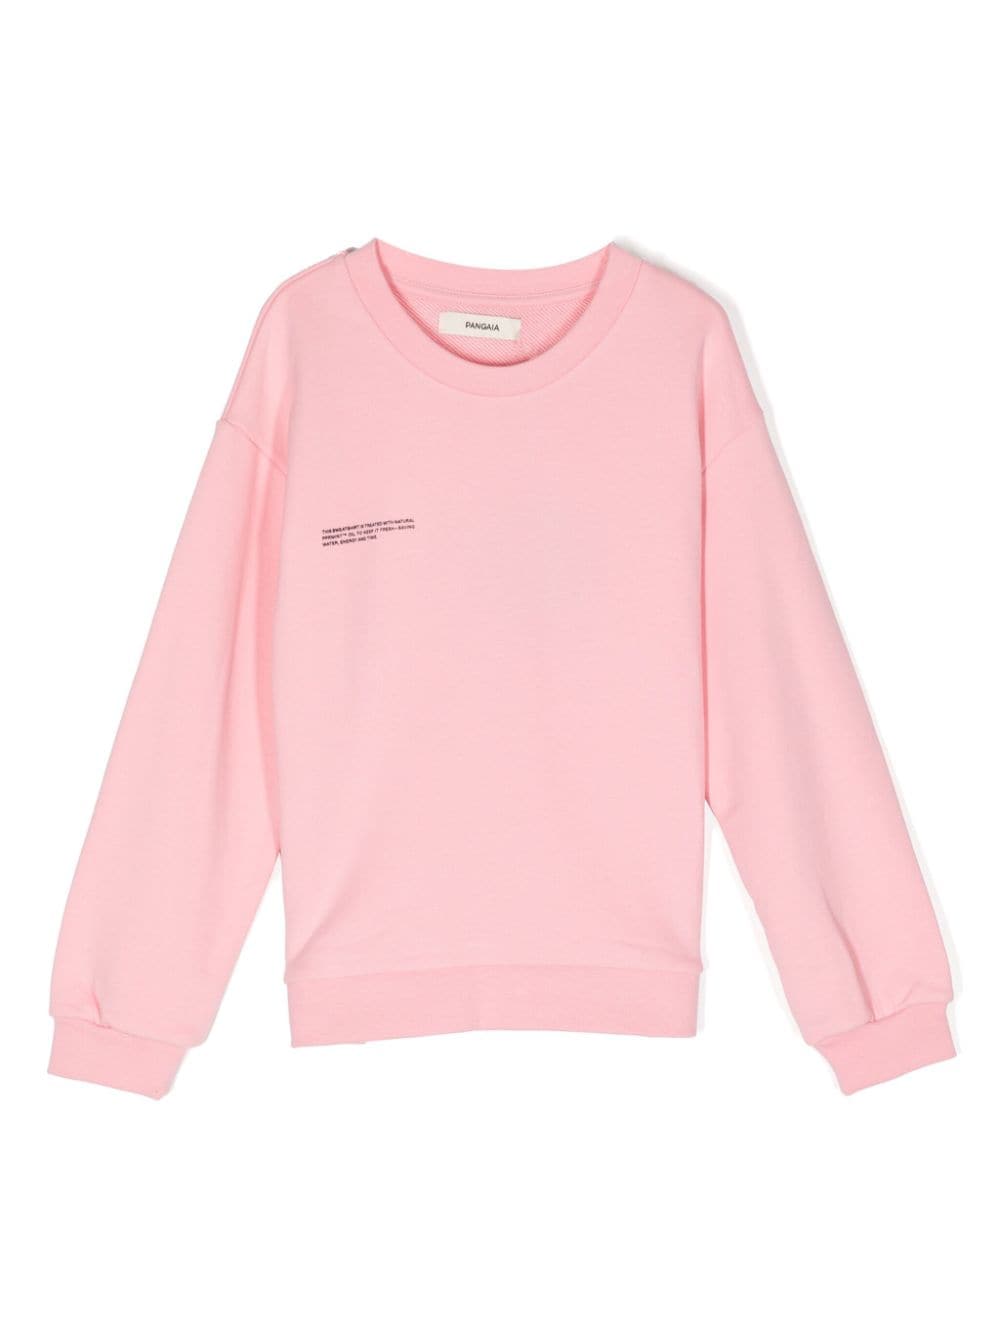 Pangaia Kids Sweater met tekst Roze